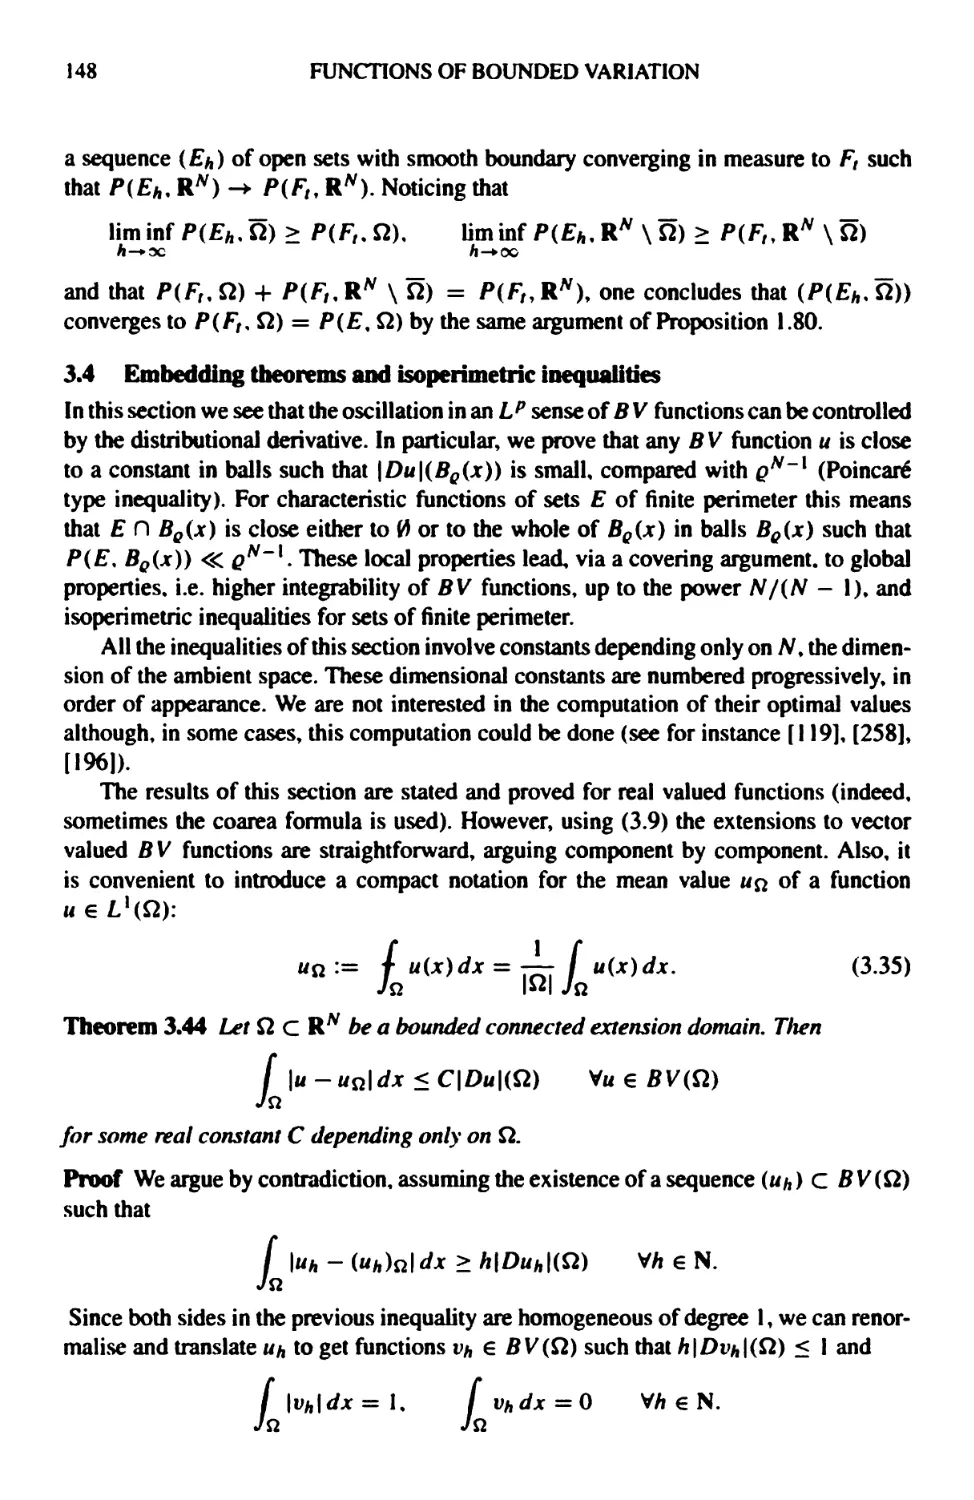 3.4 Embedding theorems and isoperimetric inequalities